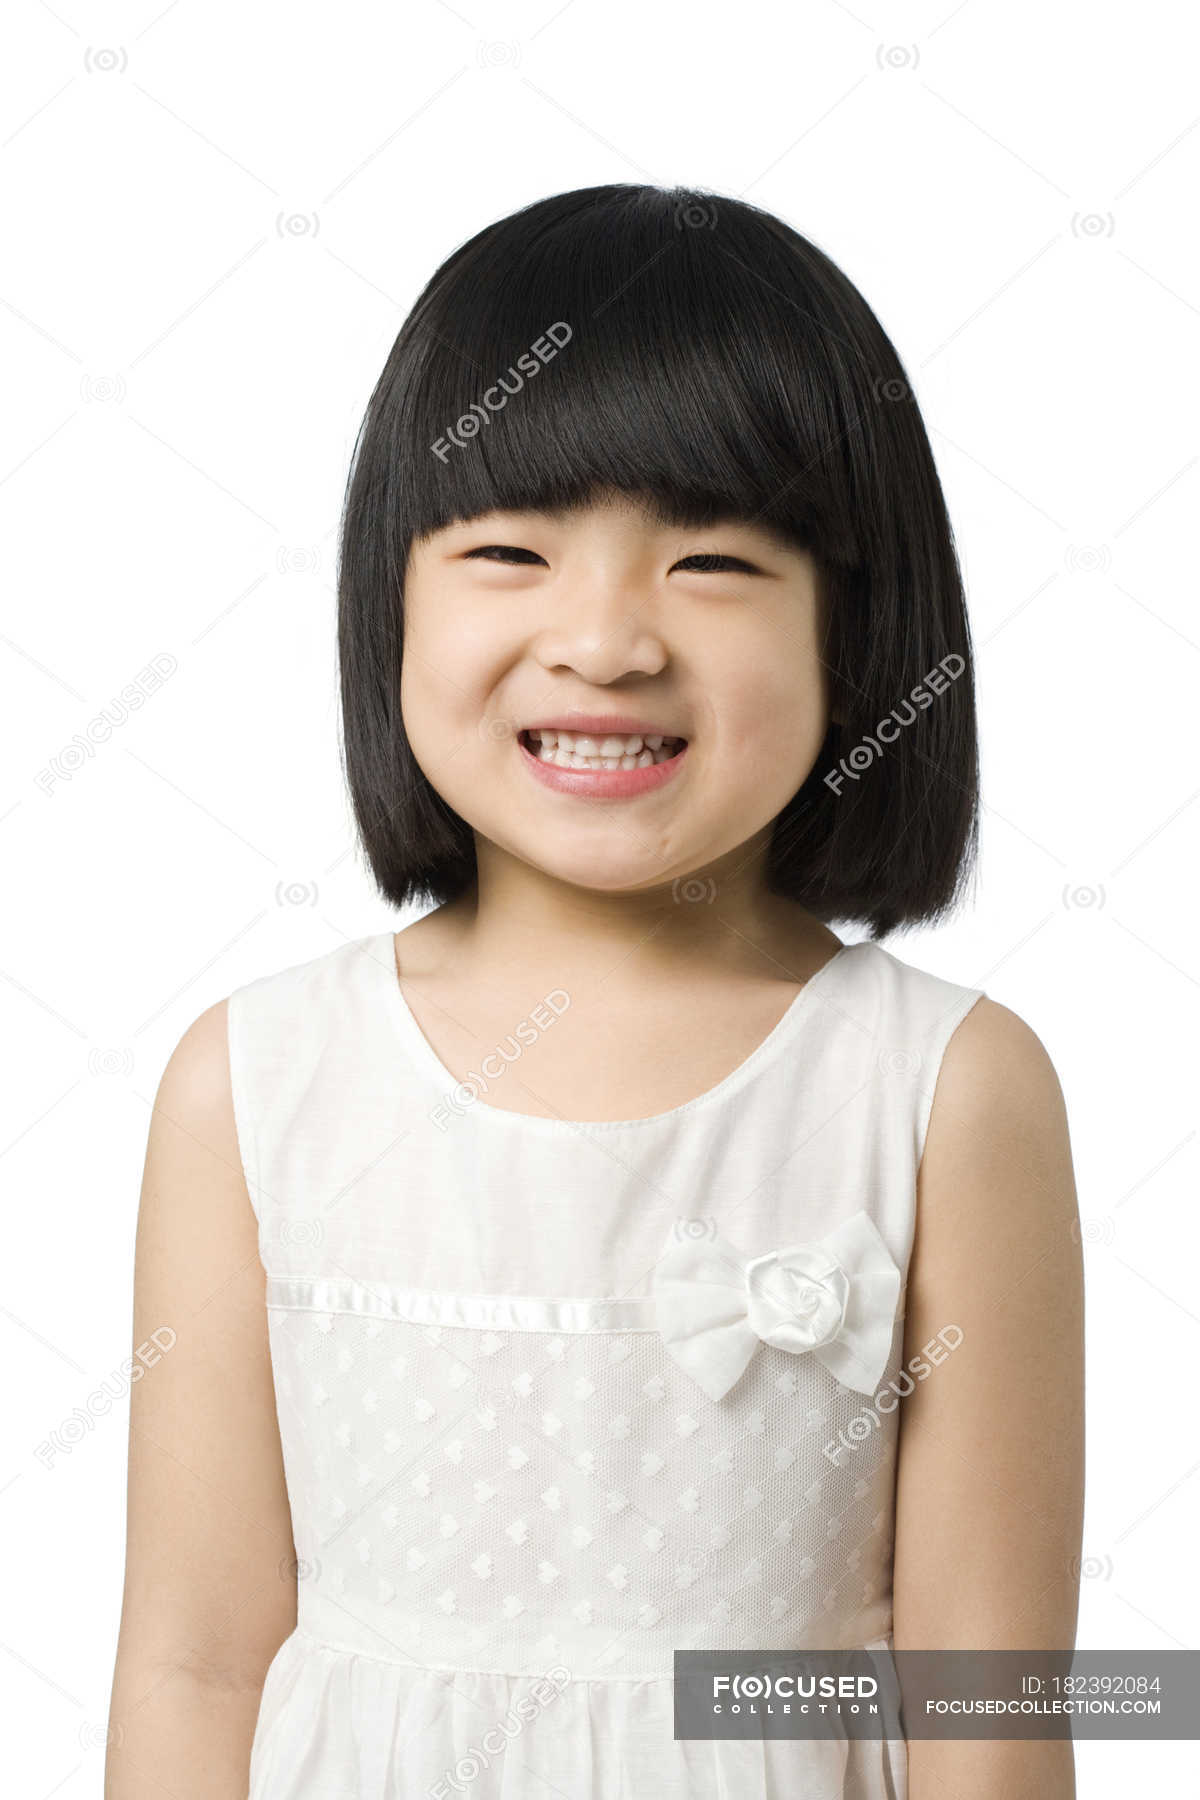 Focused 182392084 Stock Photo Portrait Little Chinese Girl White 